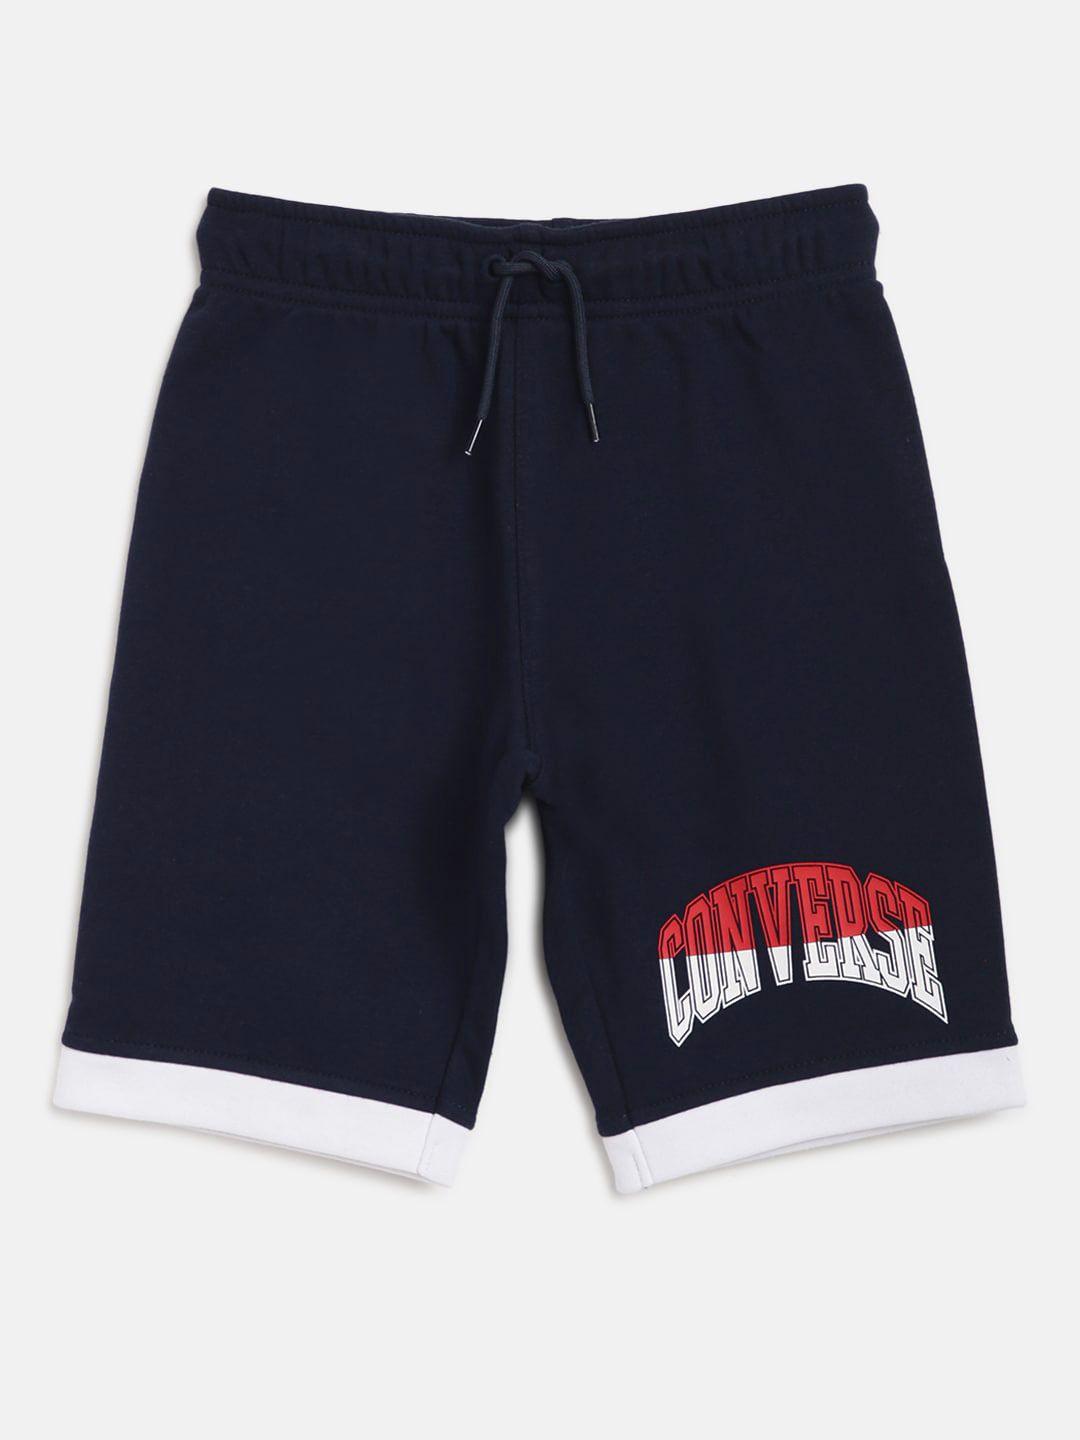 converse boys navy blue solid shorts